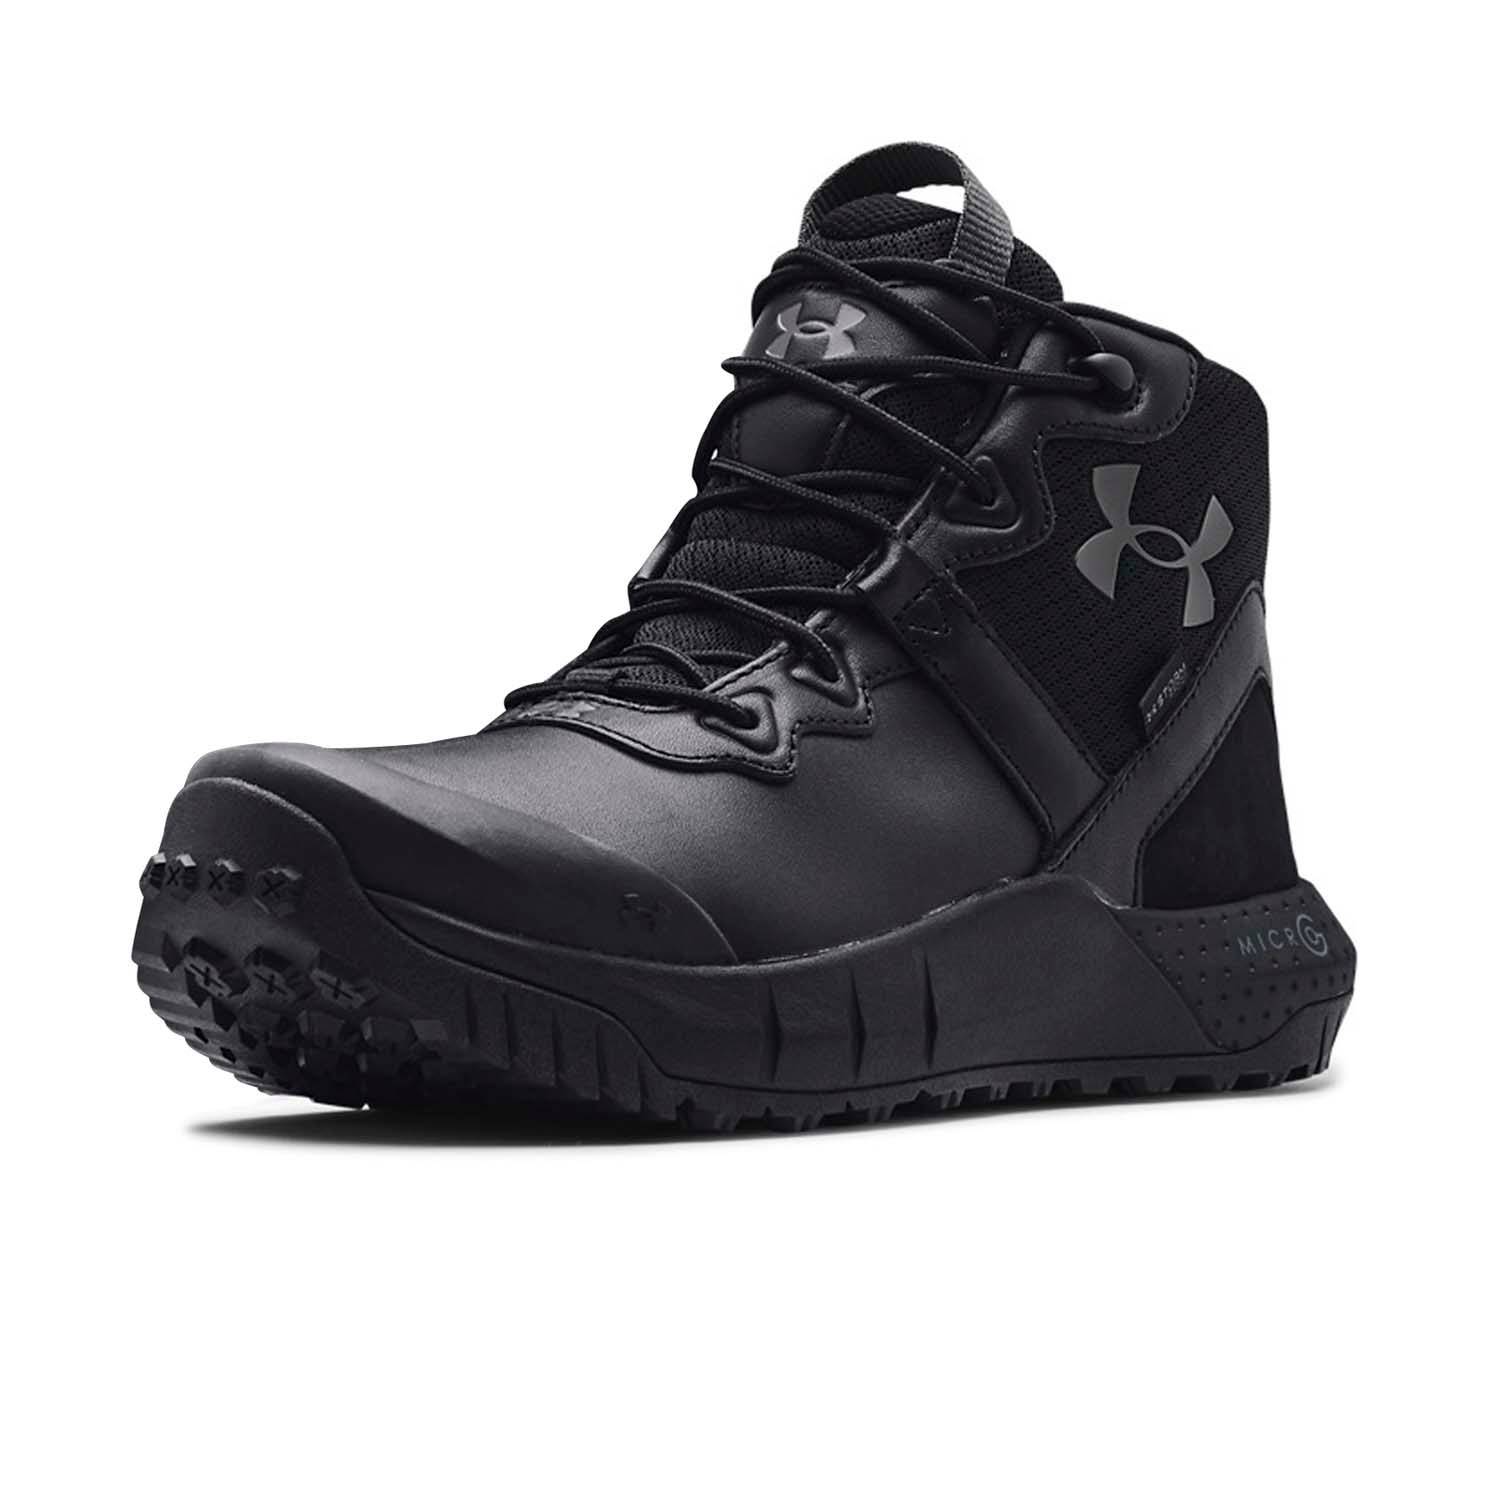 UA Women's Micro G Valsetz Mid Leather Waterproof Boots